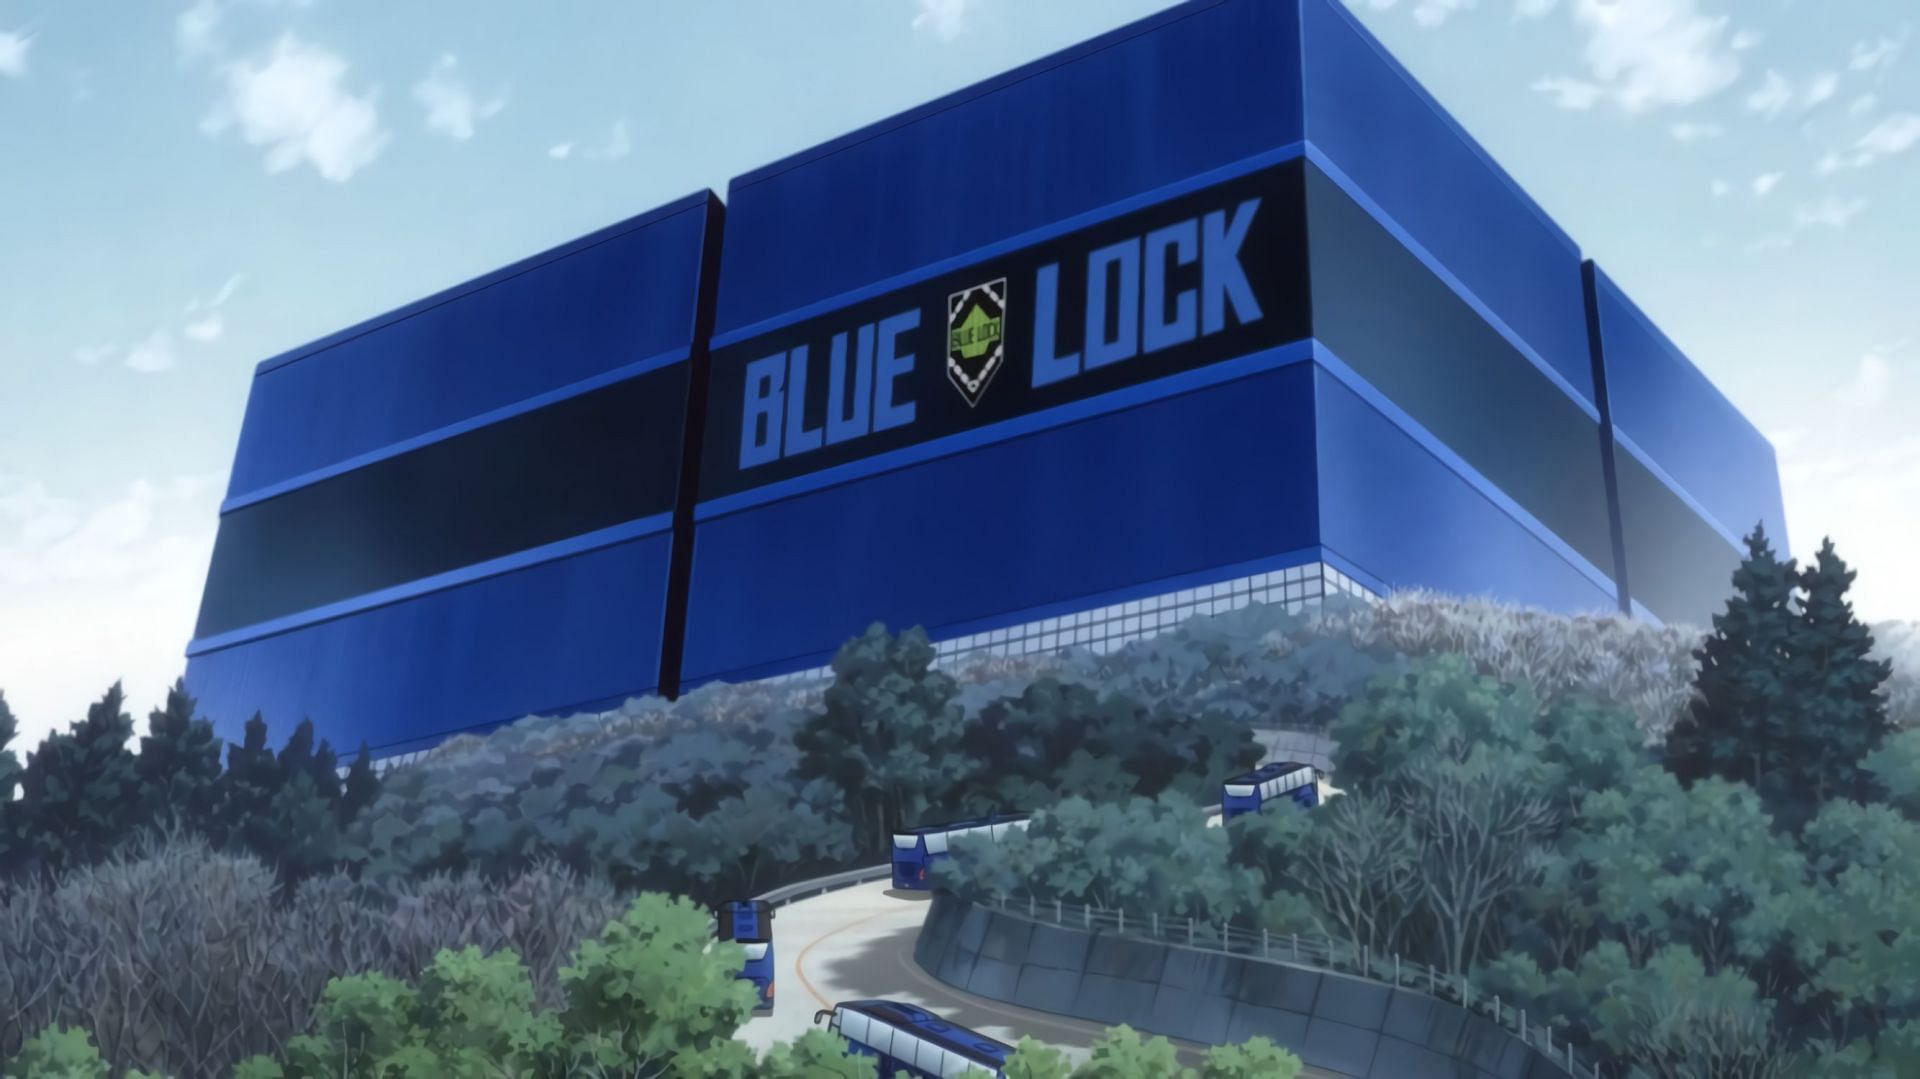 The Blue Lock facility (Image via Muneyuki Kaneshiro, Kodansha)